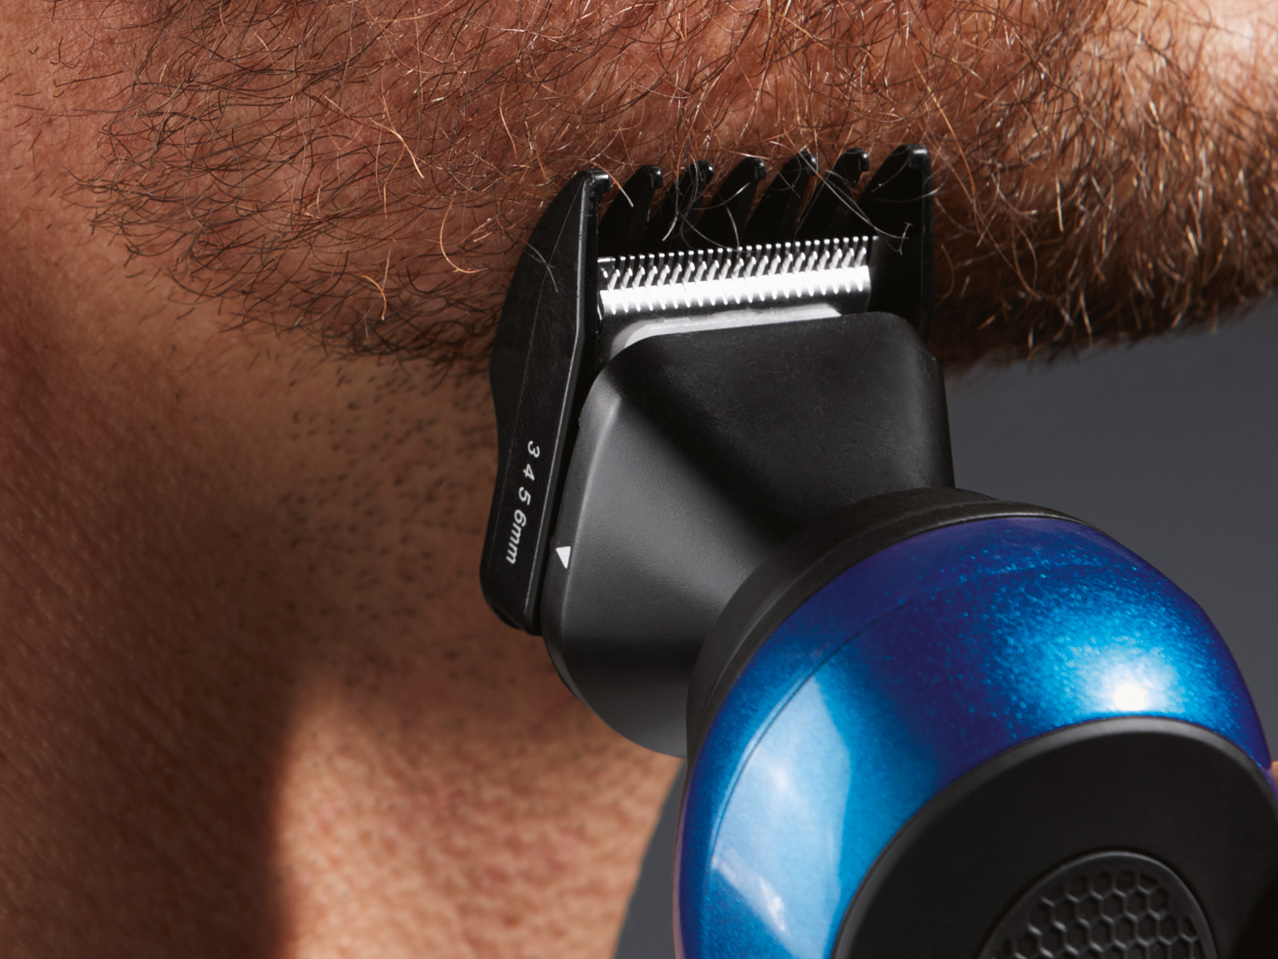 SILVERCREST(R) PERSONAL CARE Máquina de Barbear Rotativa